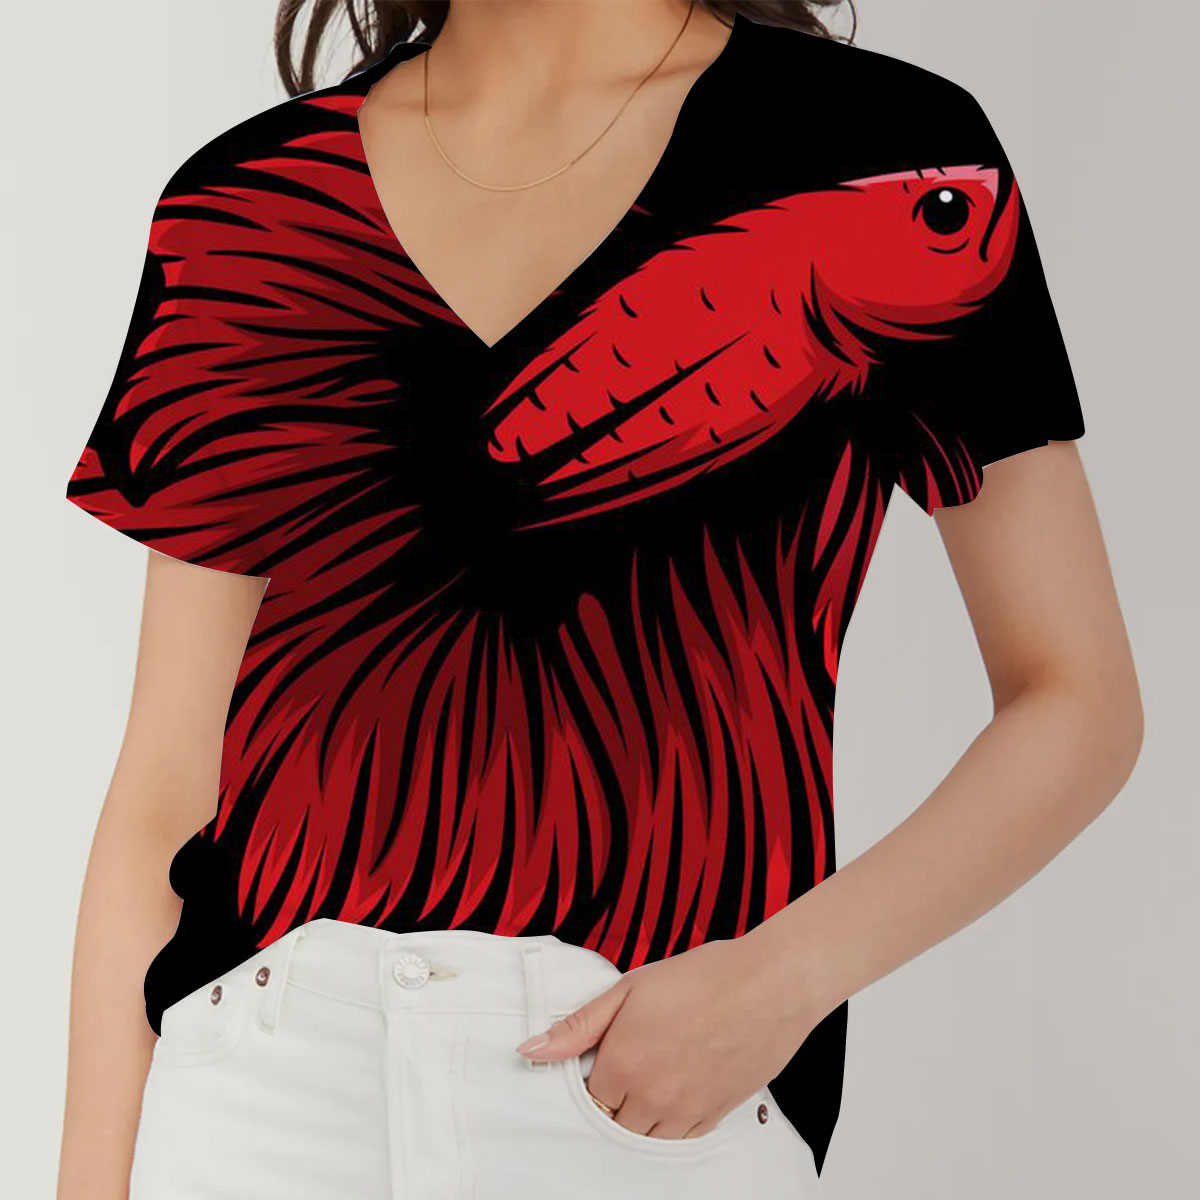 Red Betta Fish V-Neck Women's T-Shirt